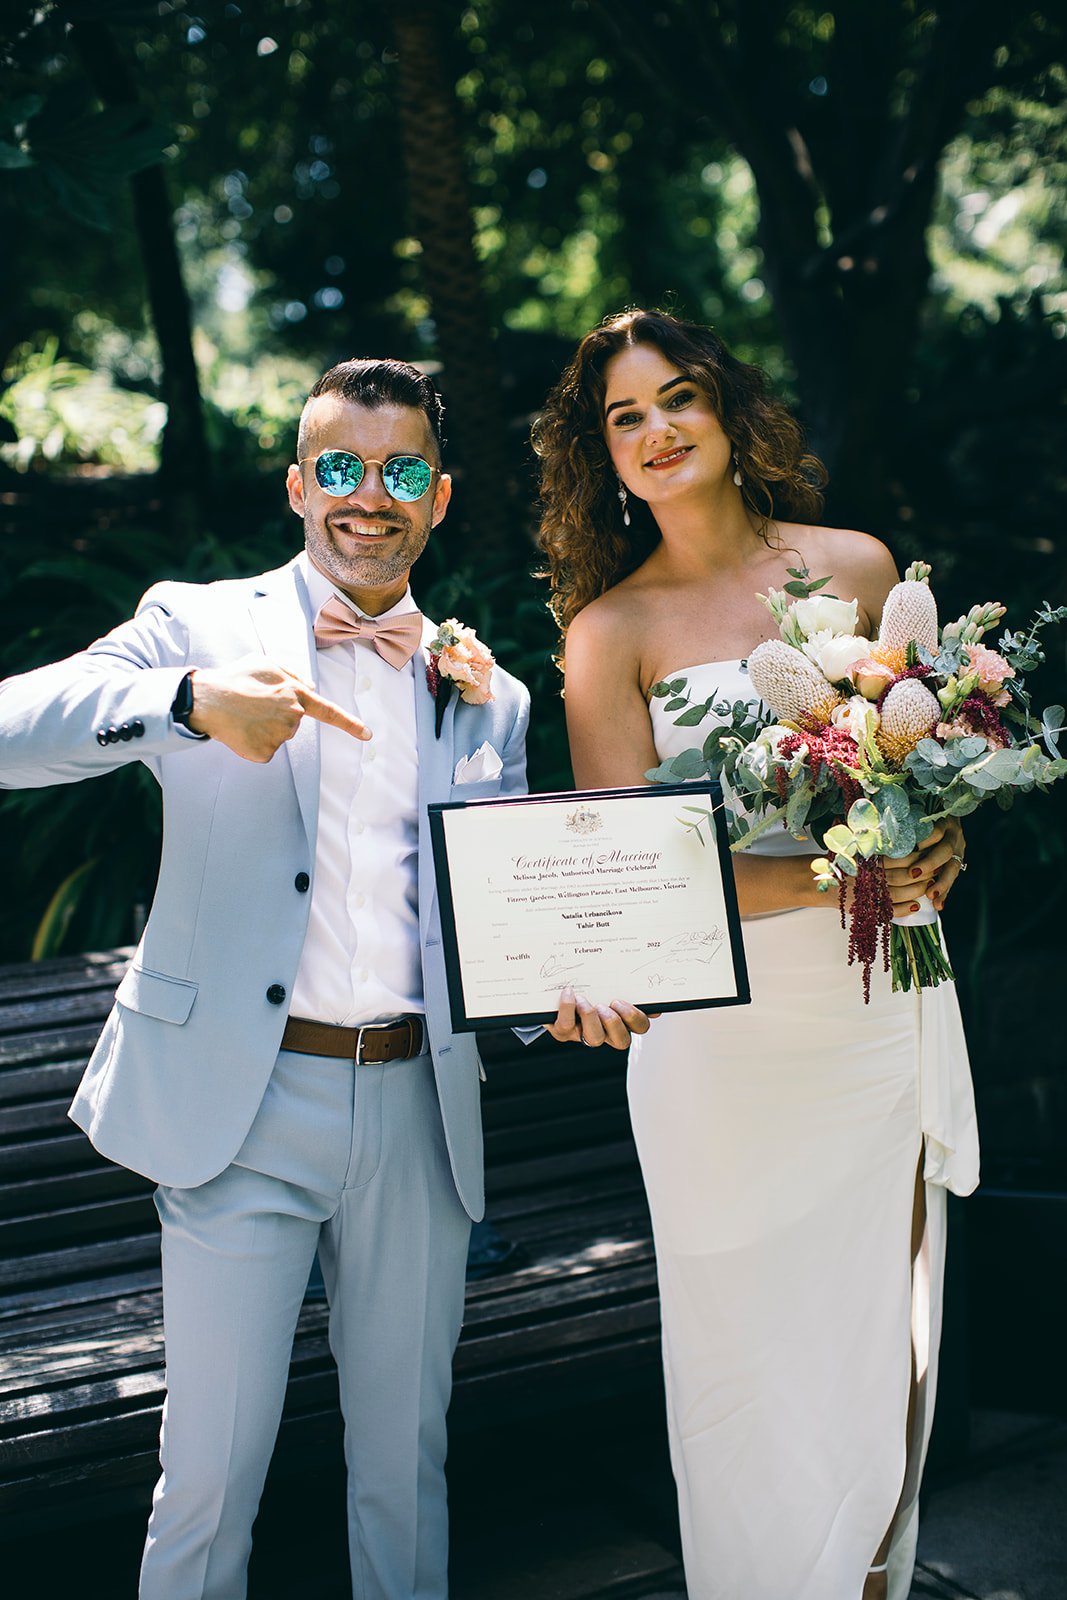 Celebrant in Hobart for registry style wedding